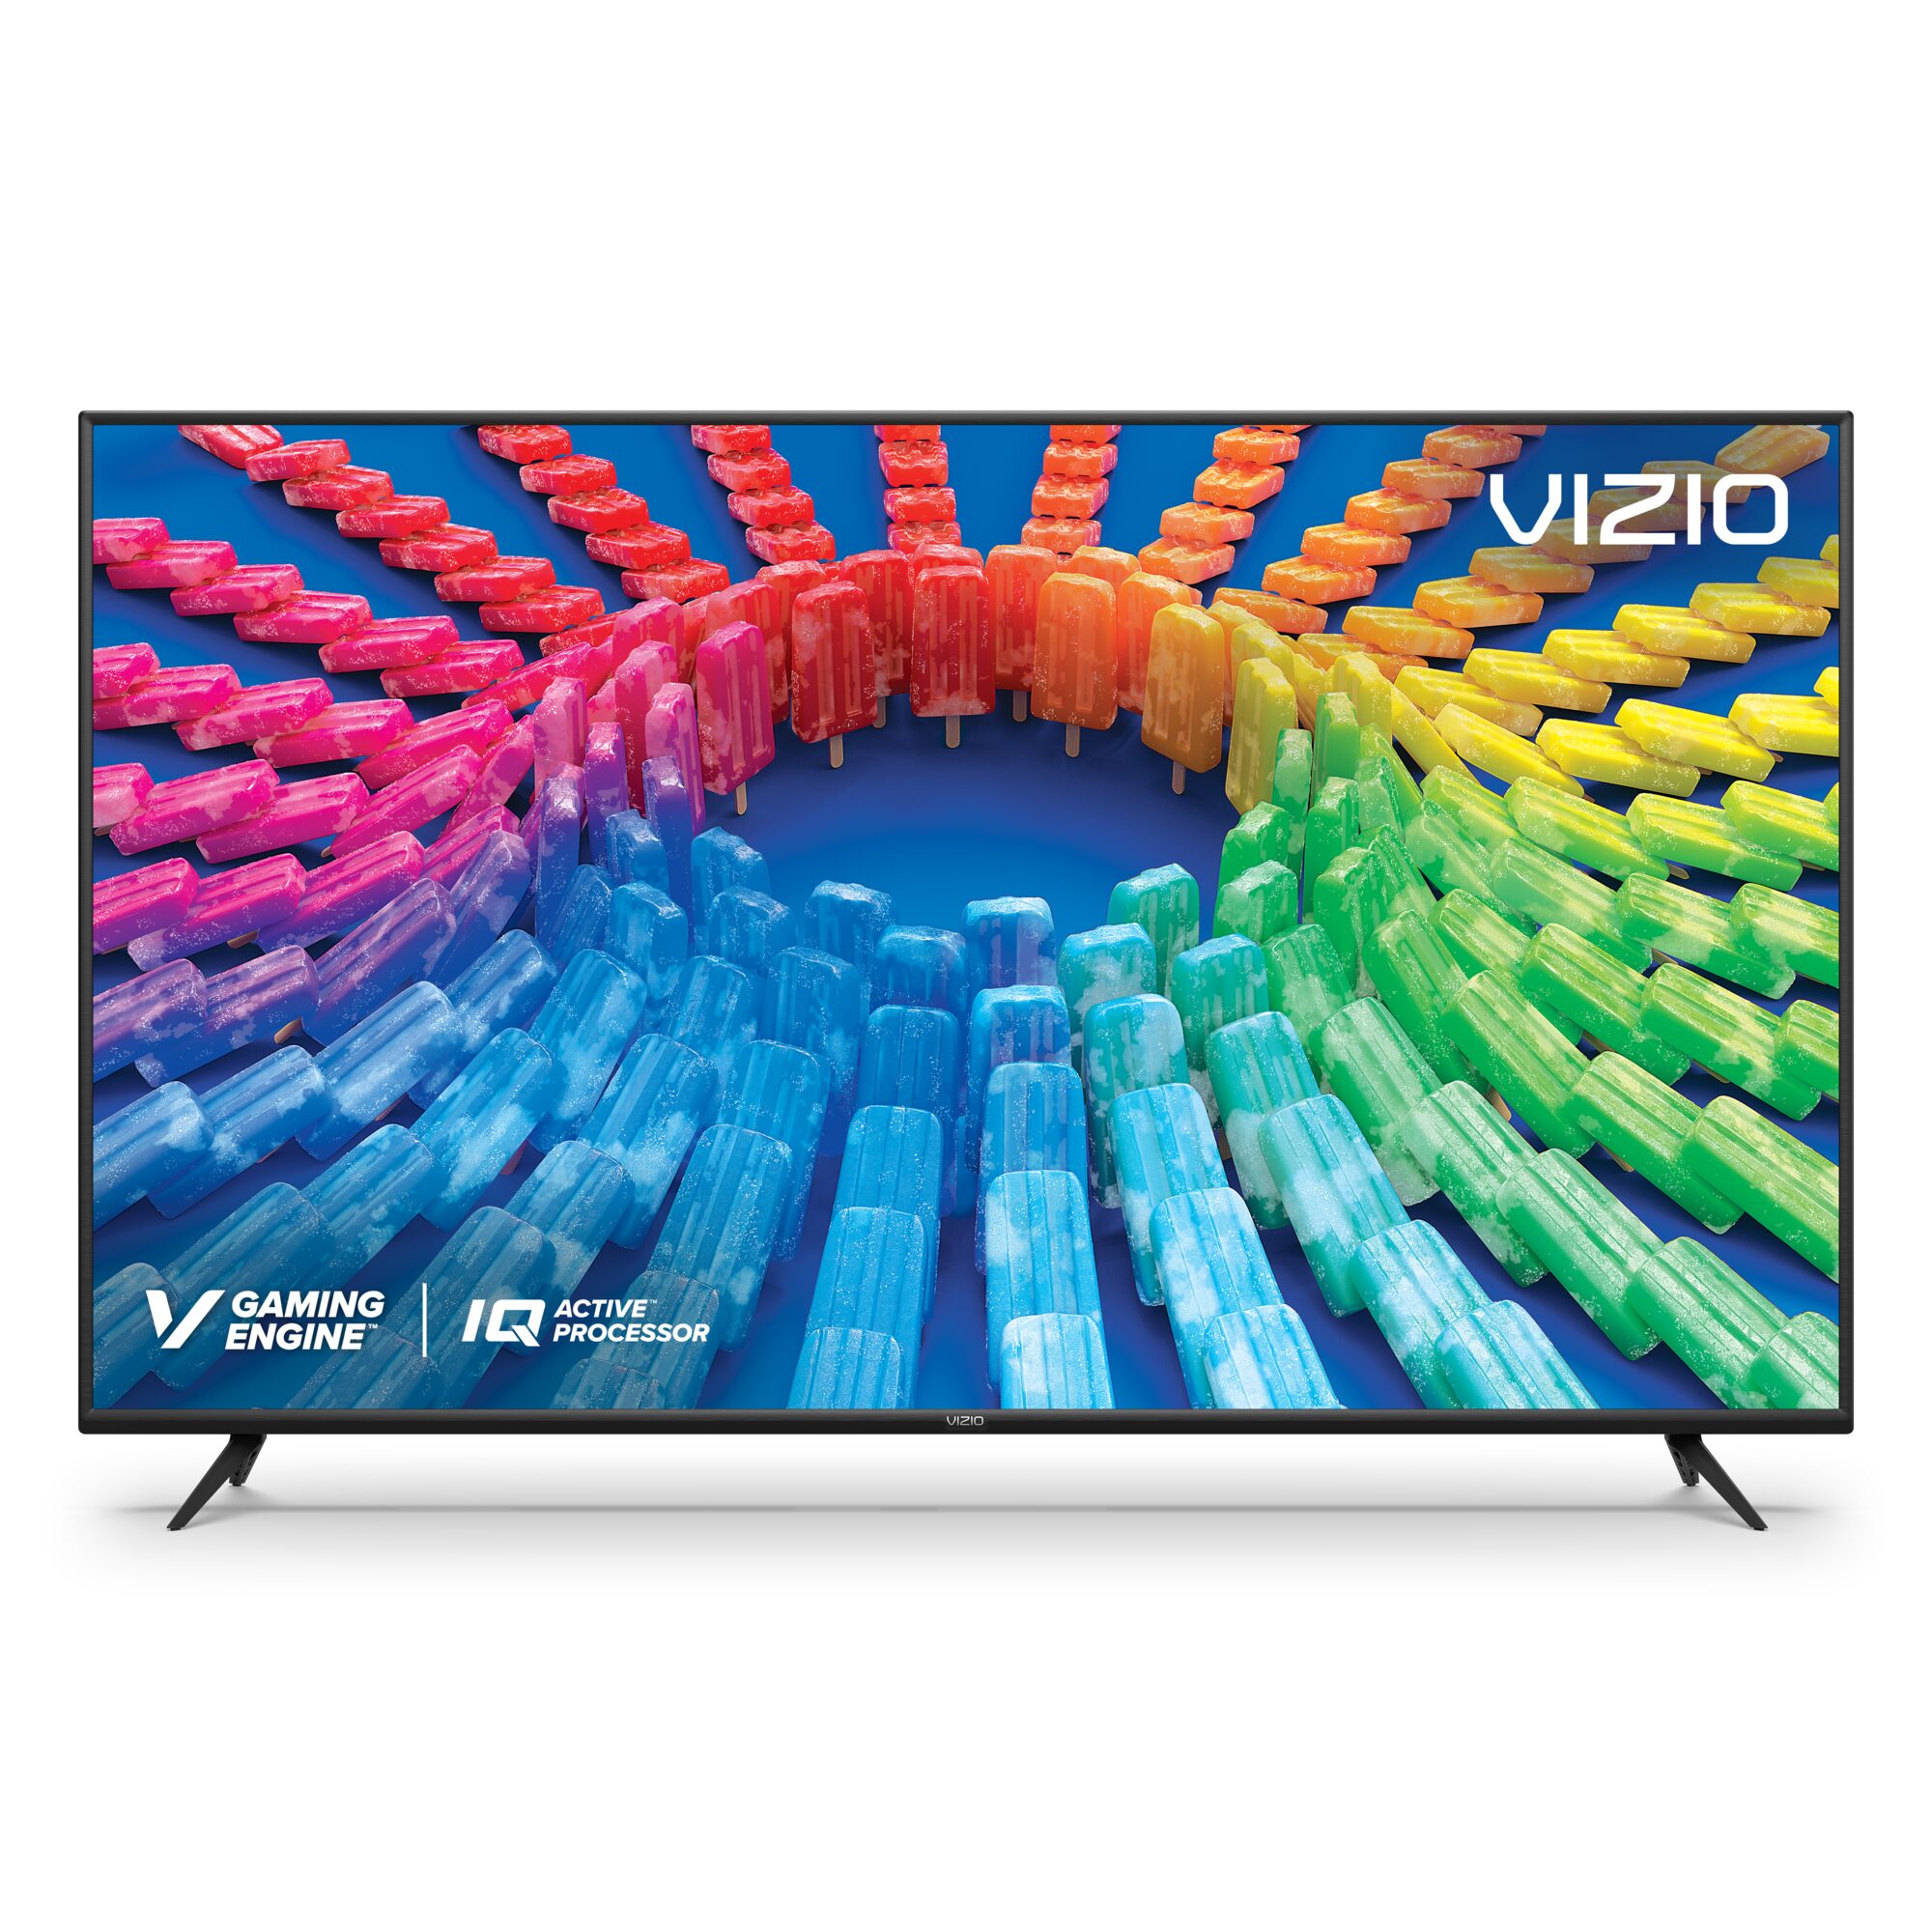 75" VIZIO V755 4K HDR SmartCast TV - image 4 of 31